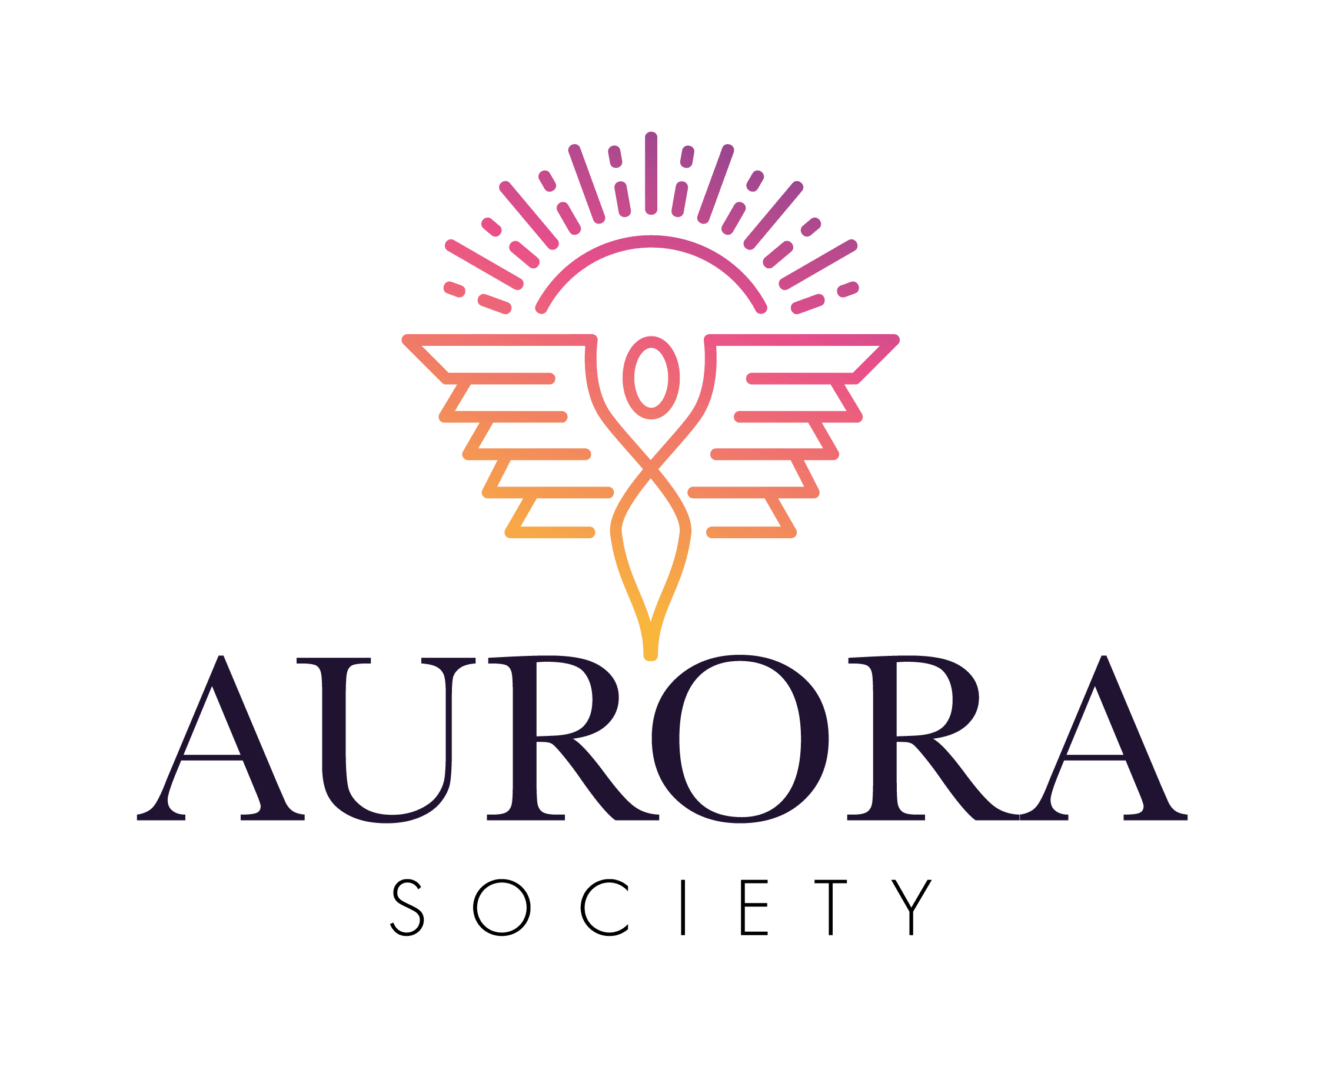 The Aurora Society